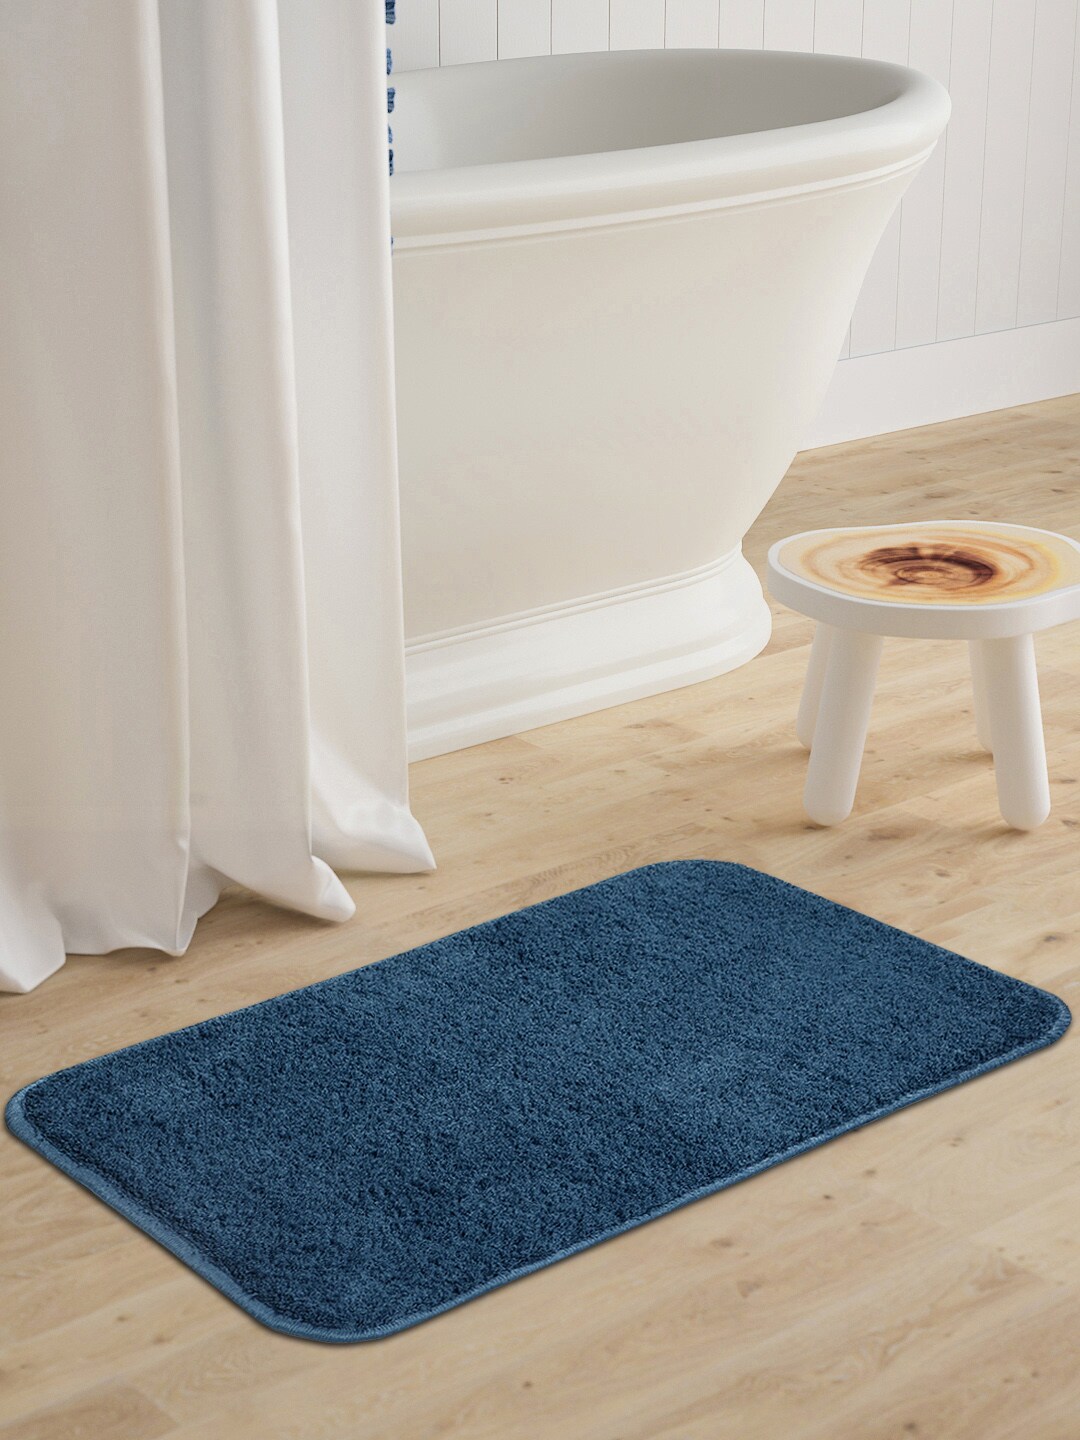 Saral Home Teal Blue Neo Shaggy Yarn Microfibre Anti-Skid Bath Mat Price in India